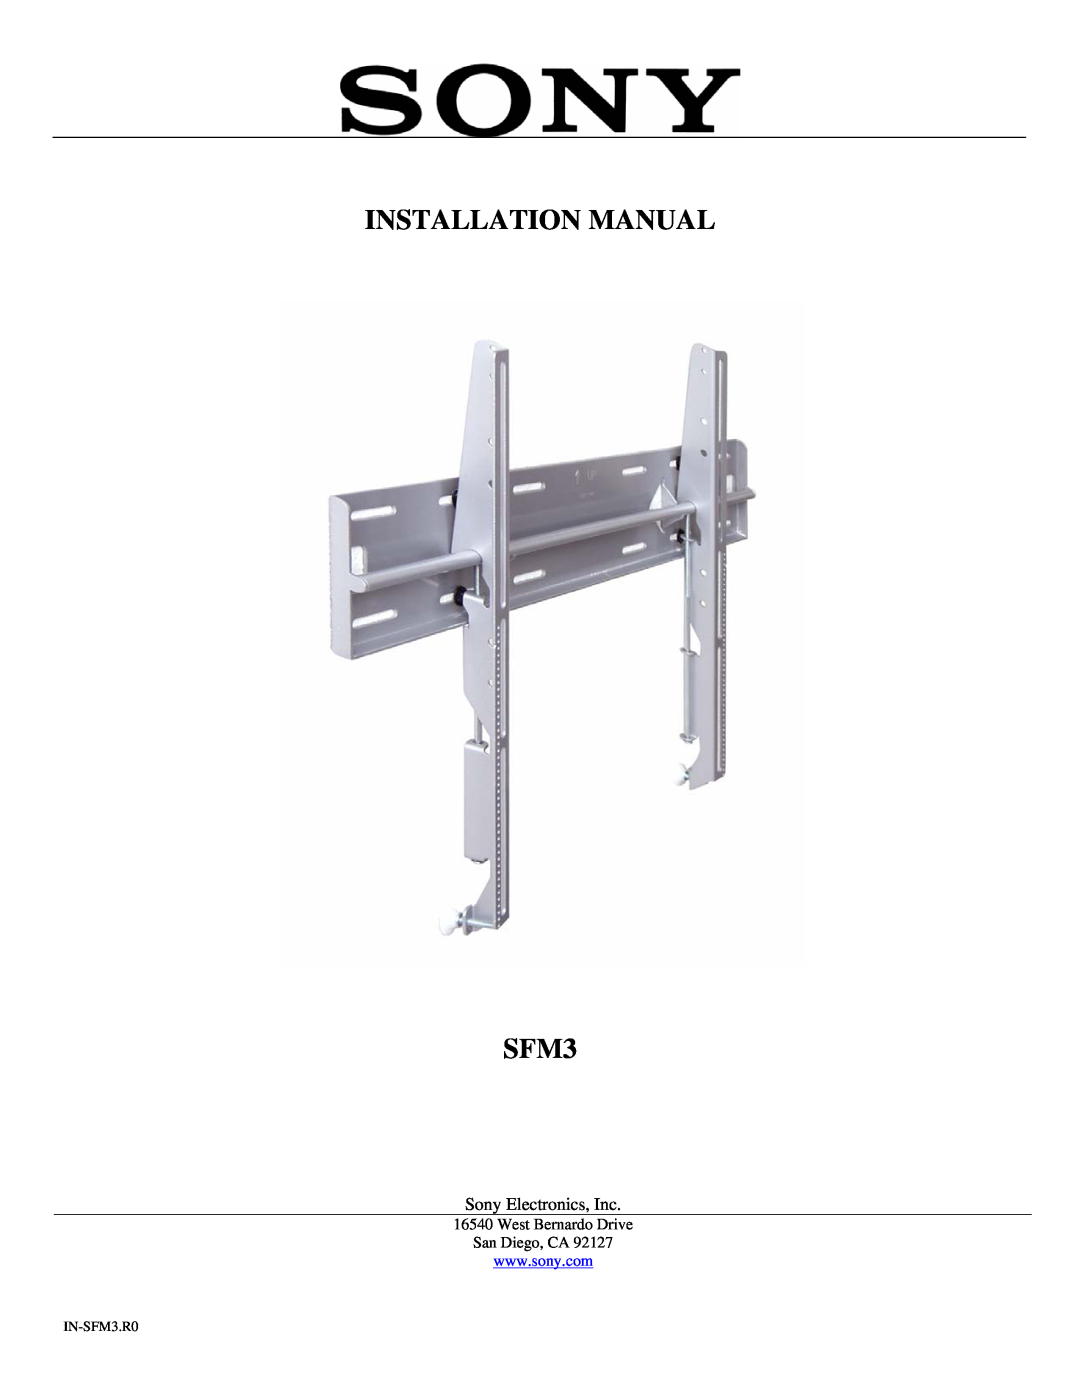 Sony installation manual INSTALLATION MANUAL SFM3, Sony Electronics, Inc, West Bernardo Drive San Diego, CA, IN-SFM3.R0 